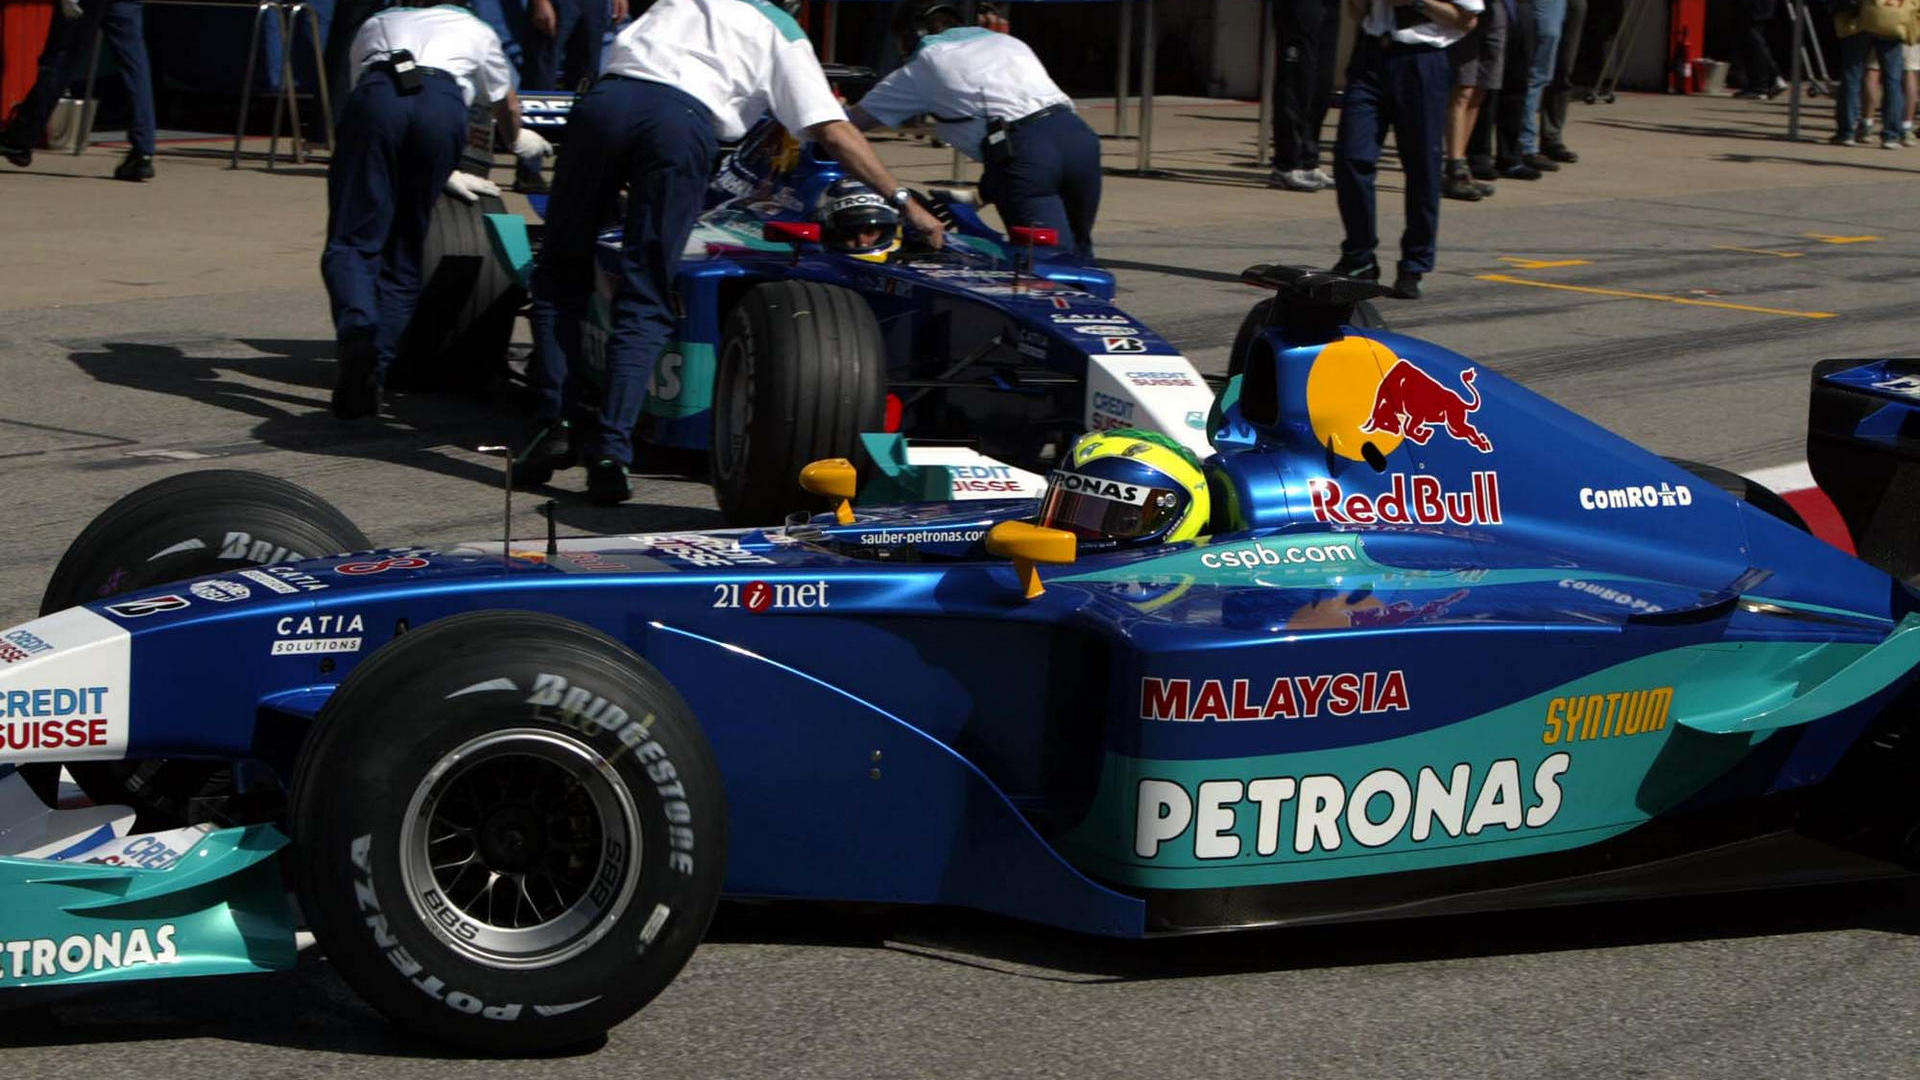 HD Wallpapers 2002 Formula 1 Grand Prix of Spain | F1-